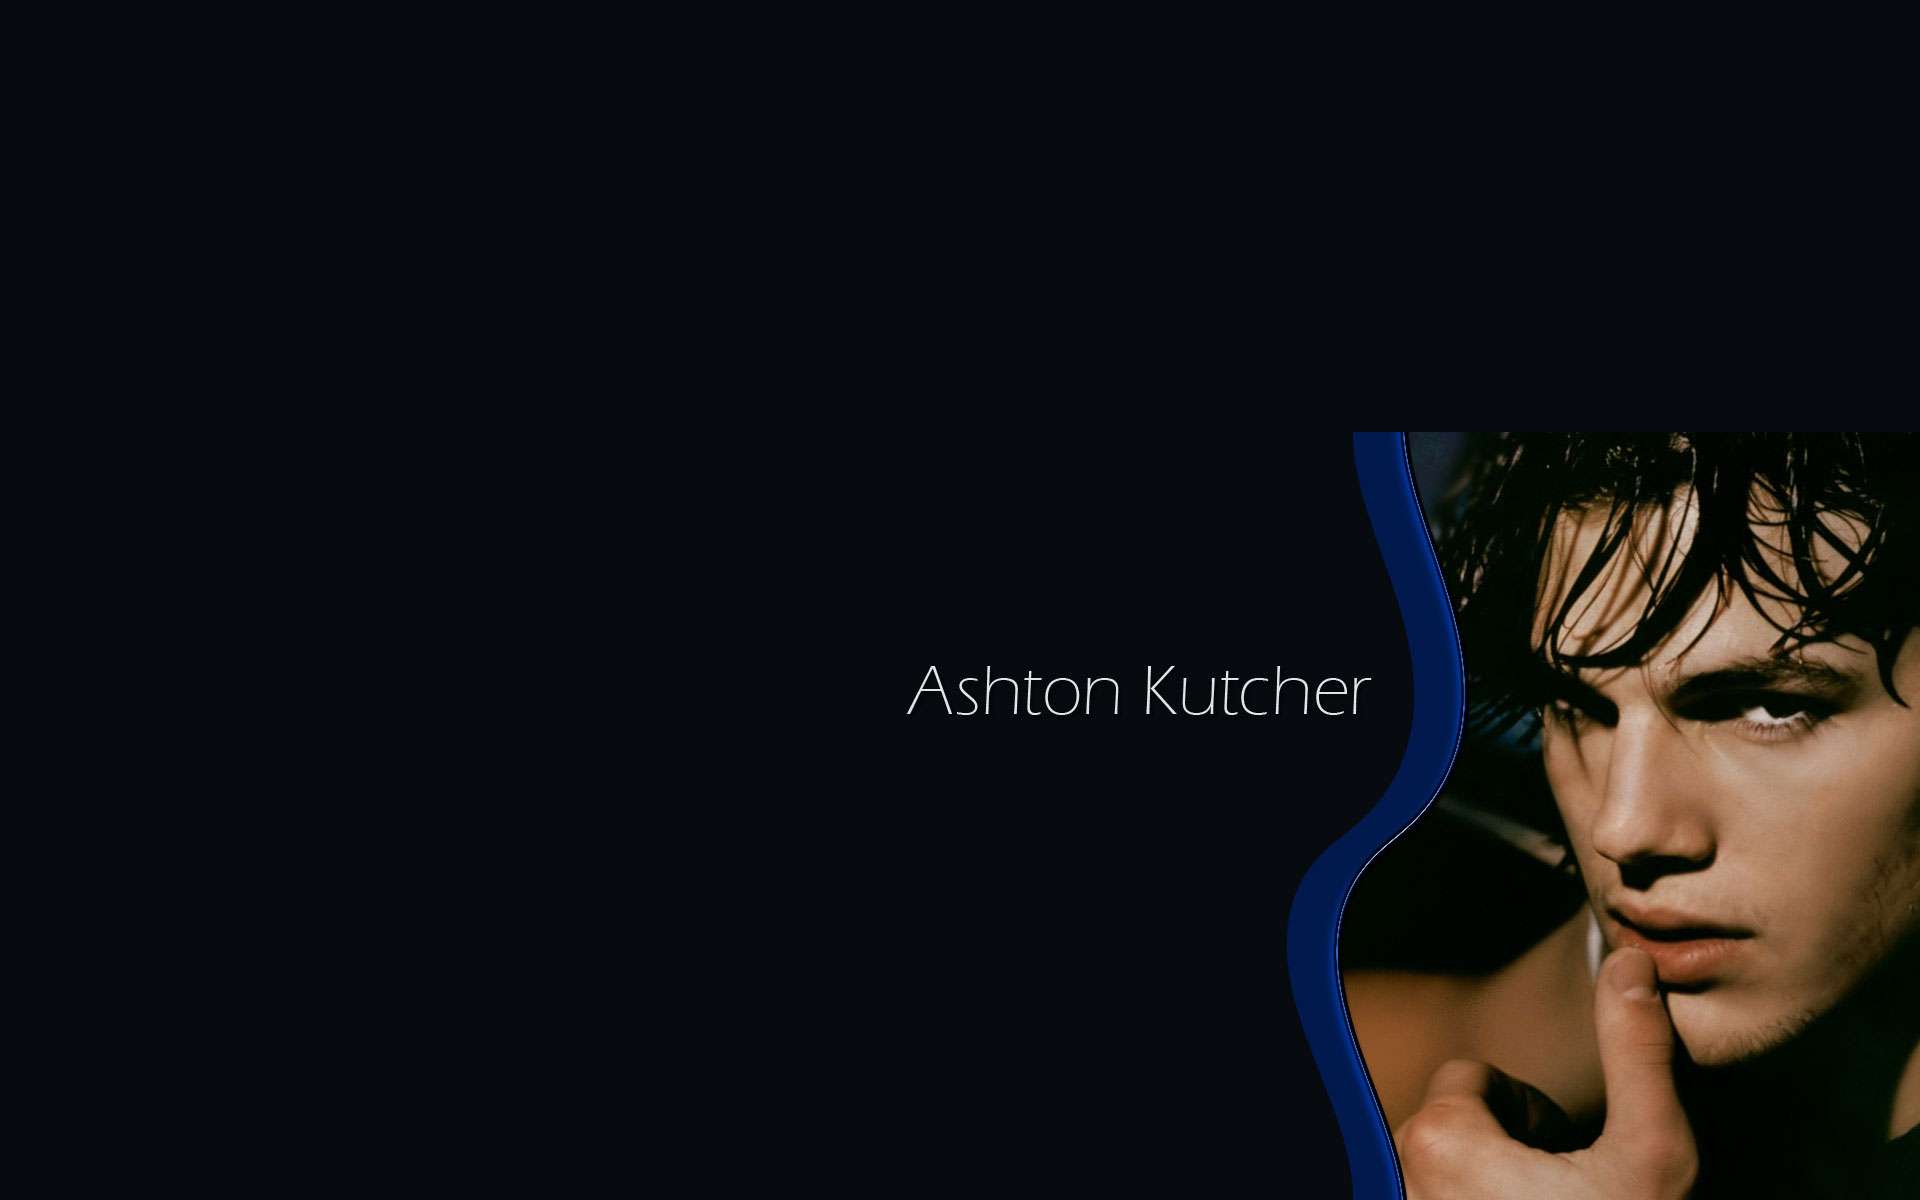 Descarga gratis la imagen Celebridades, Ashton Kutcher en el escritorio de tu PC